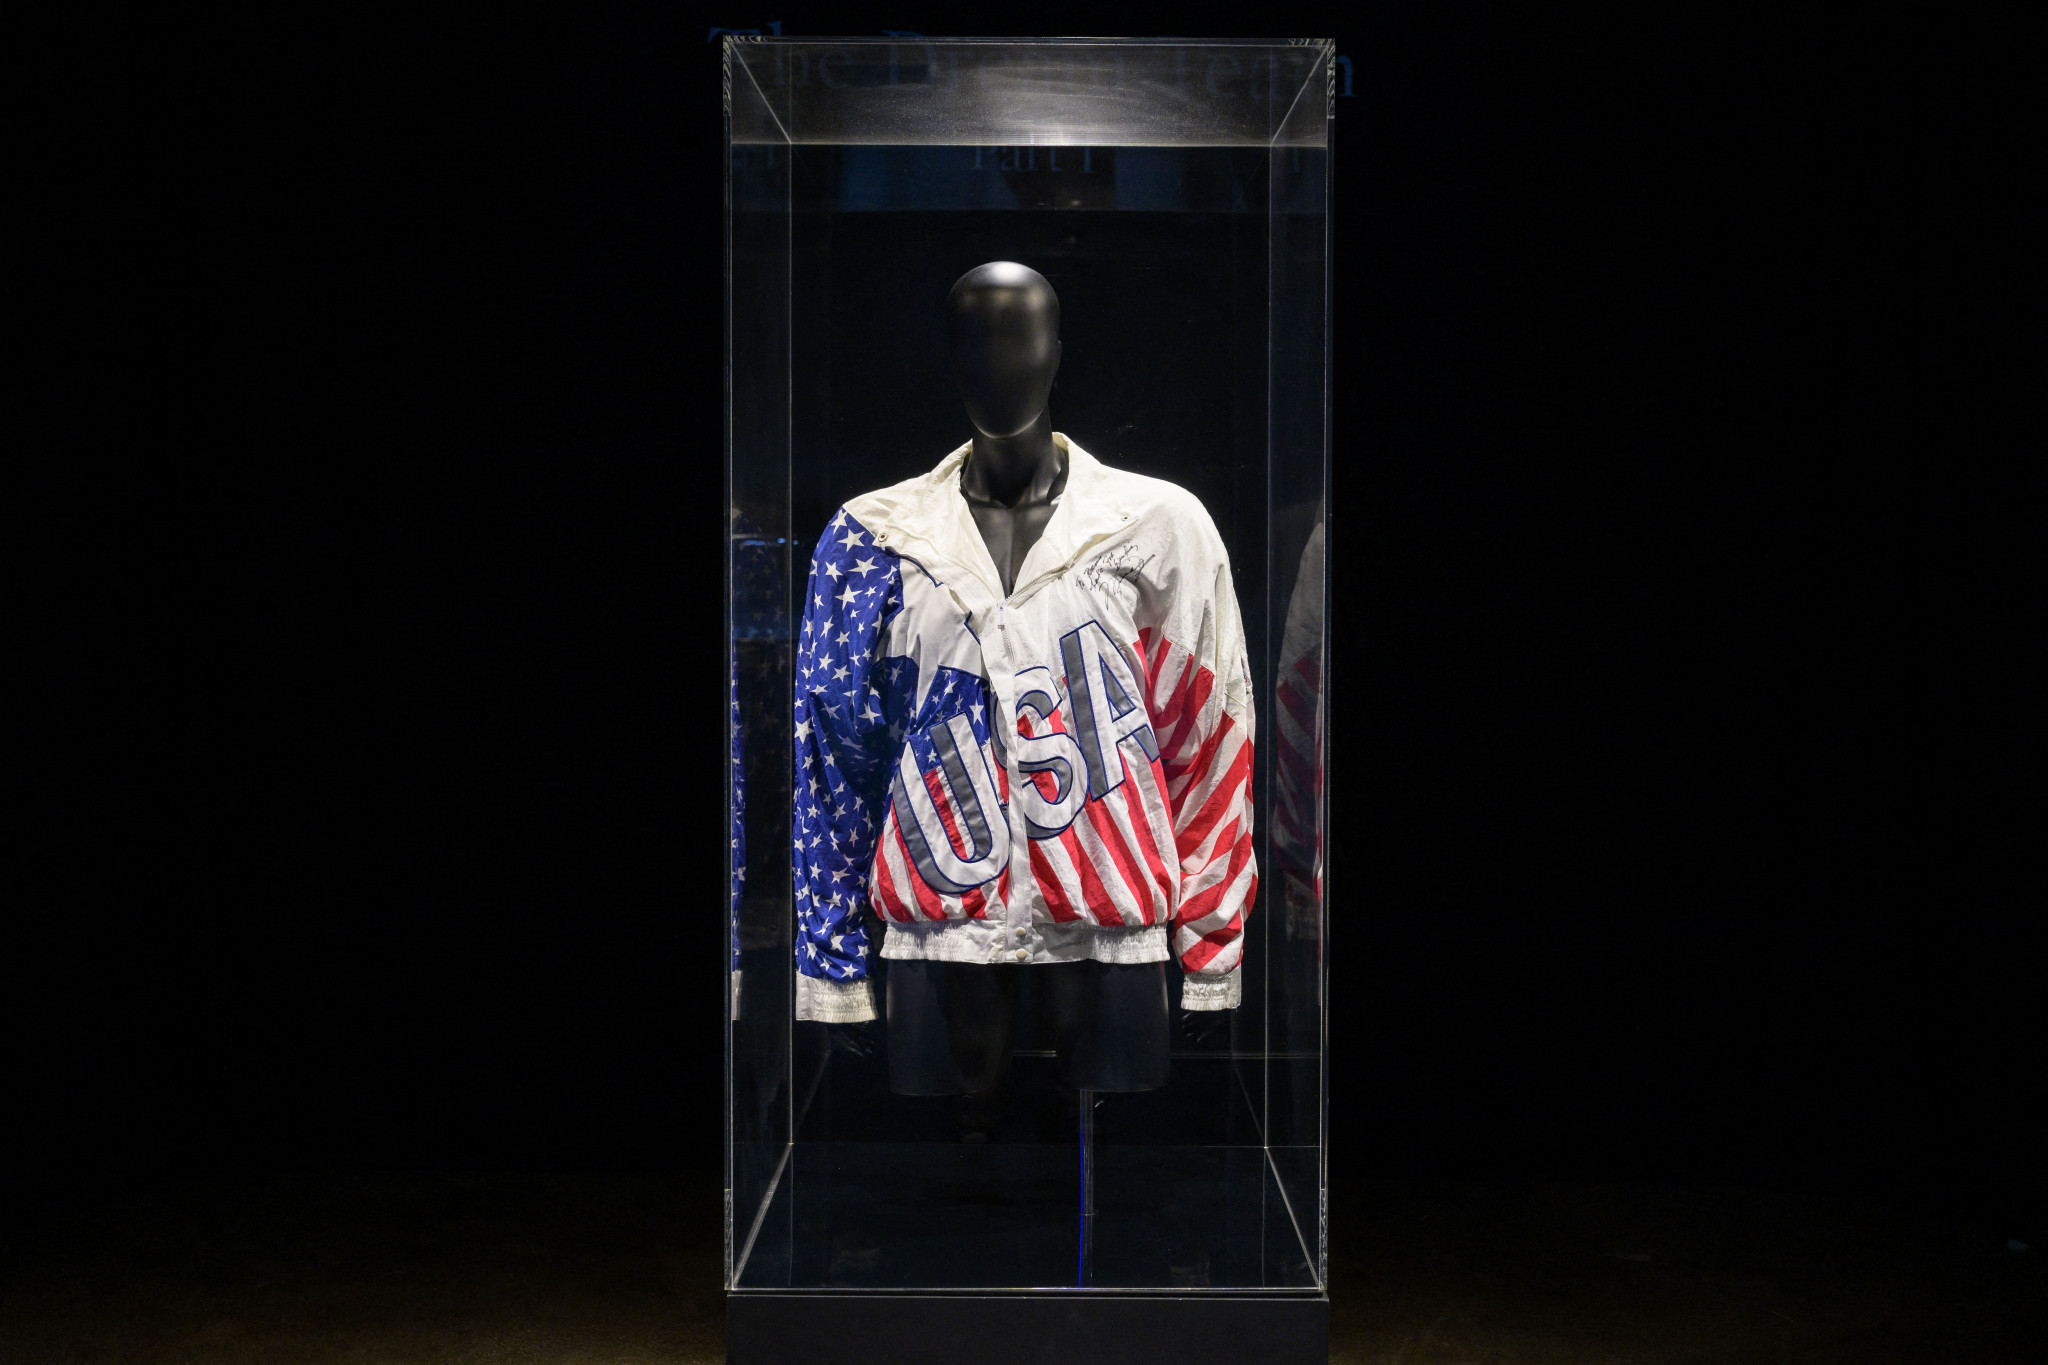 Jordan's jacket worn on Barcelona 1992 podium sells for $1.5 million